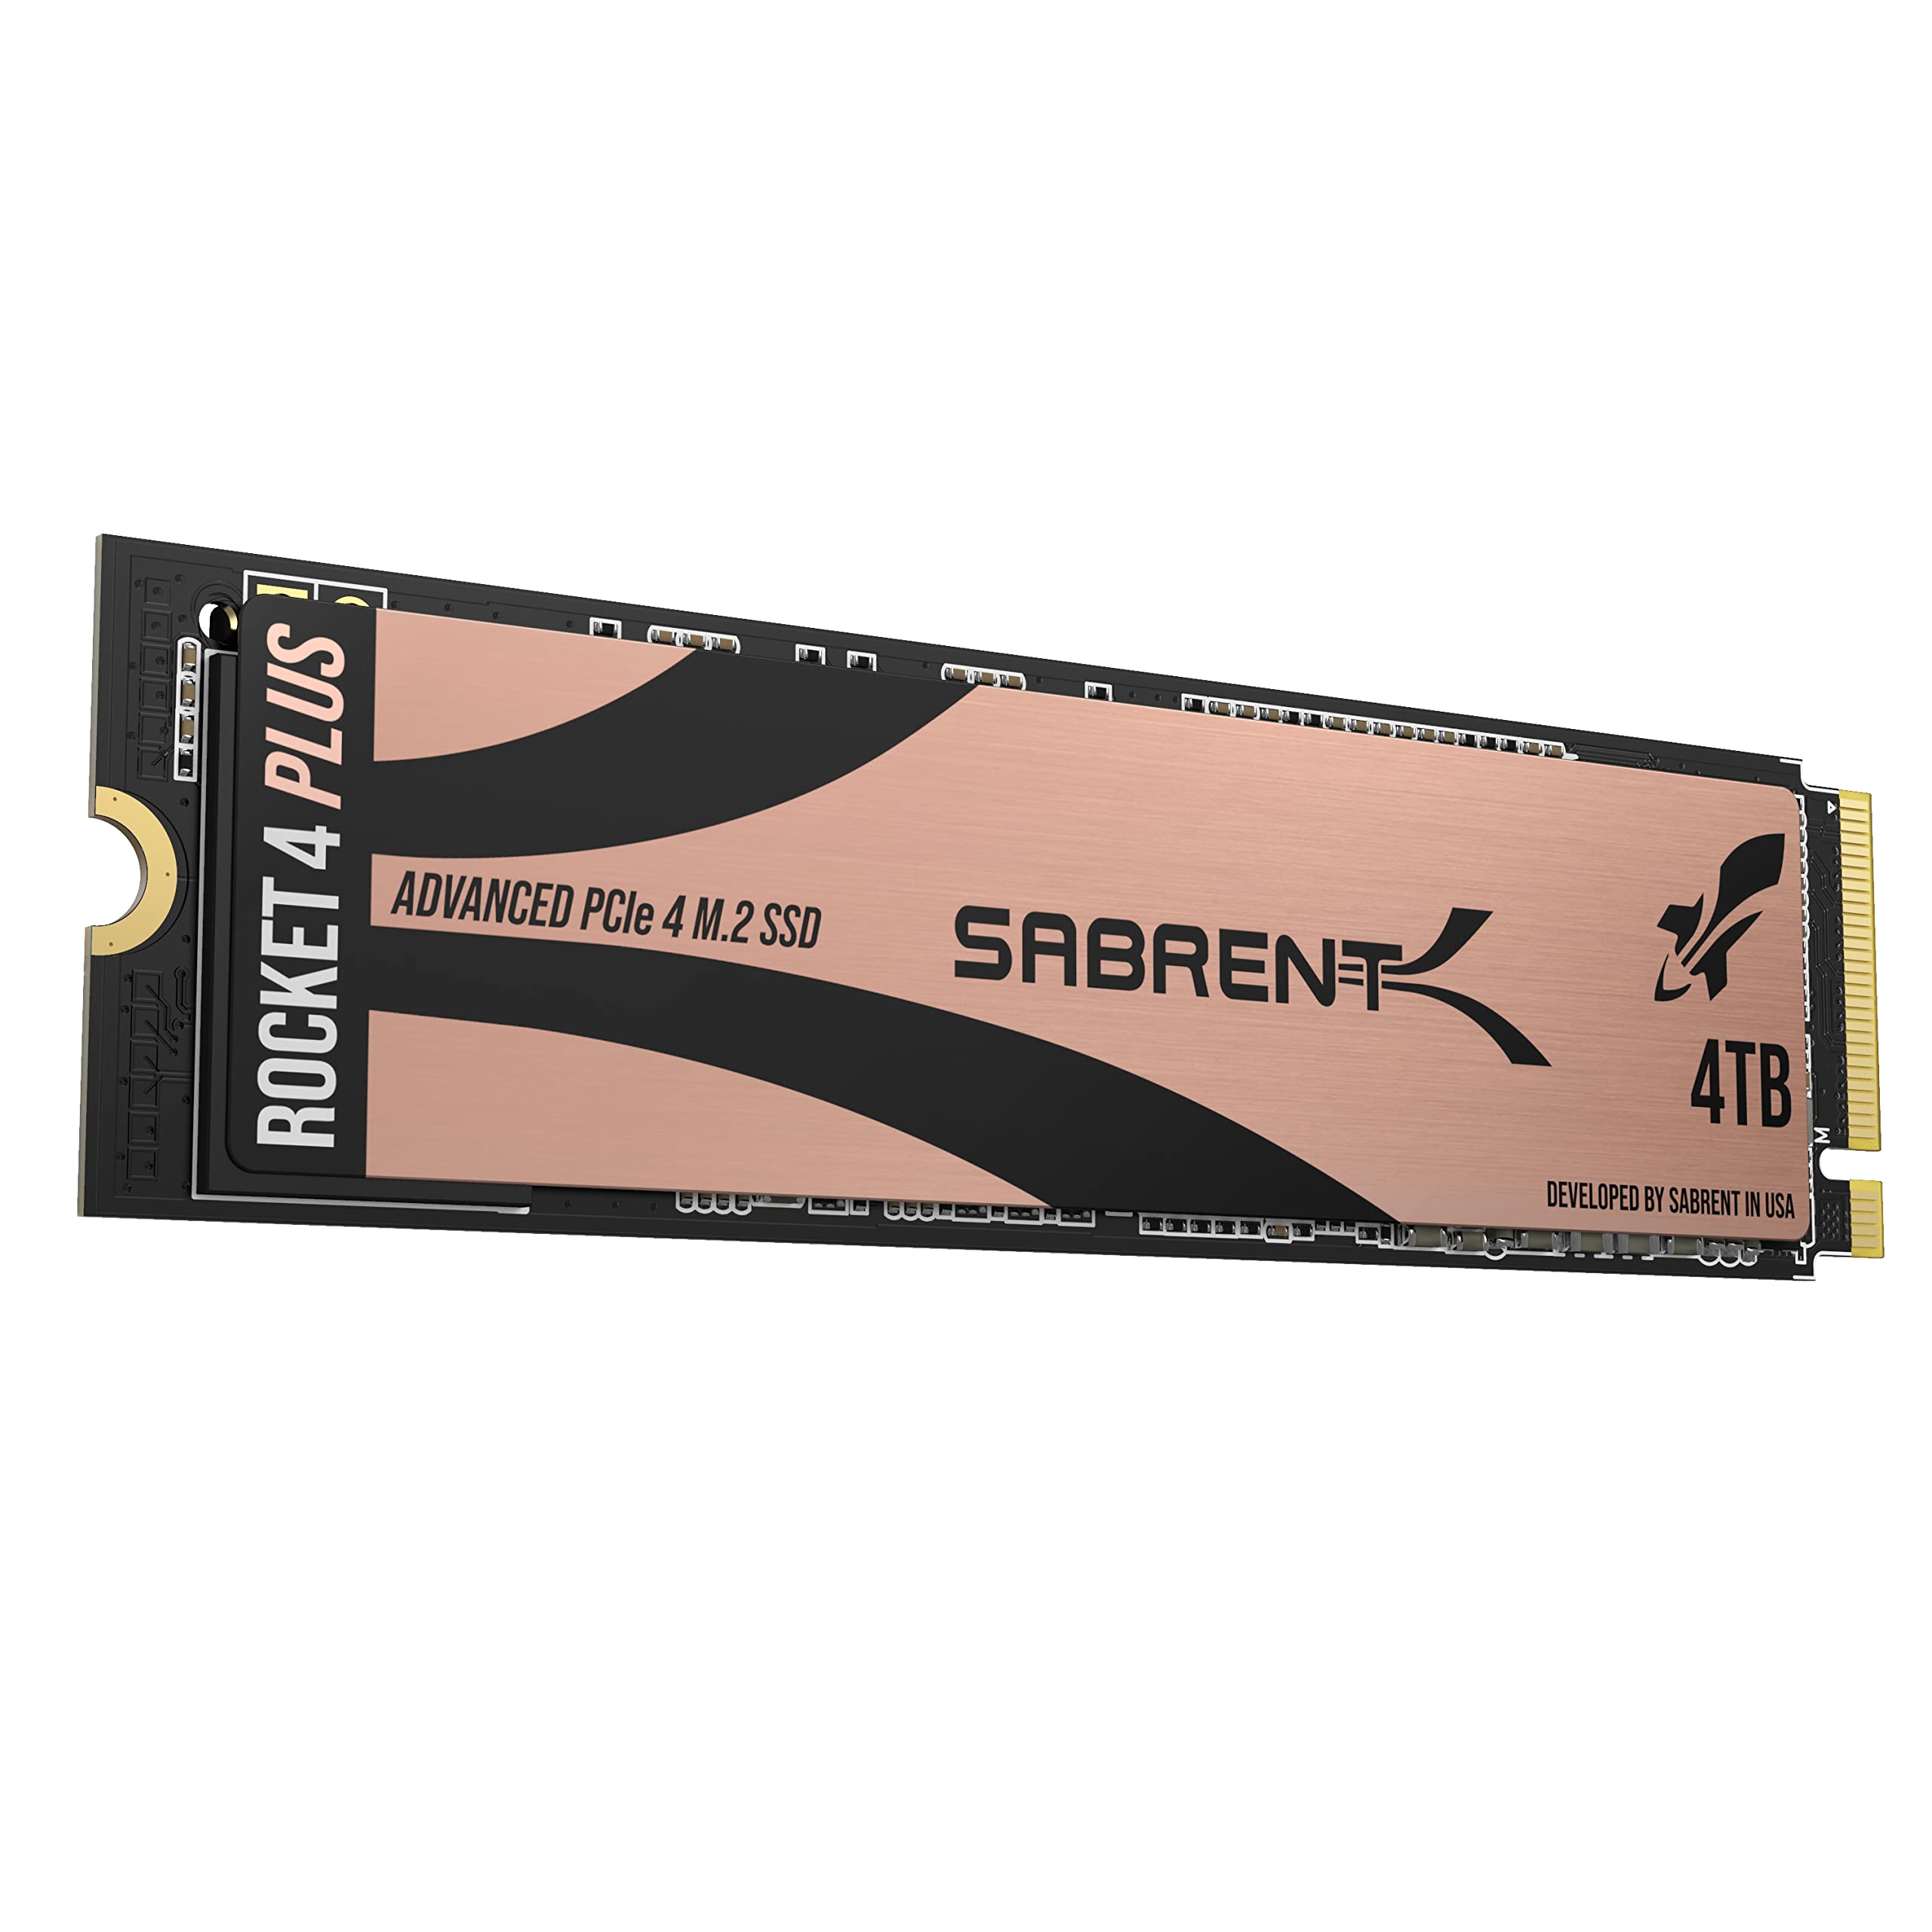 Sabrent M.2 NVMe SSD 4TB Gen 4, Internes Solid State 7100 MB/s Lesen, PCIe 4.0 intern Festplatte Für Gamer, kompatibel mit Playstation 5, PS5 Konsole, PCs, NUCs Laptops und desktops (SB-RKT4P-4TB)